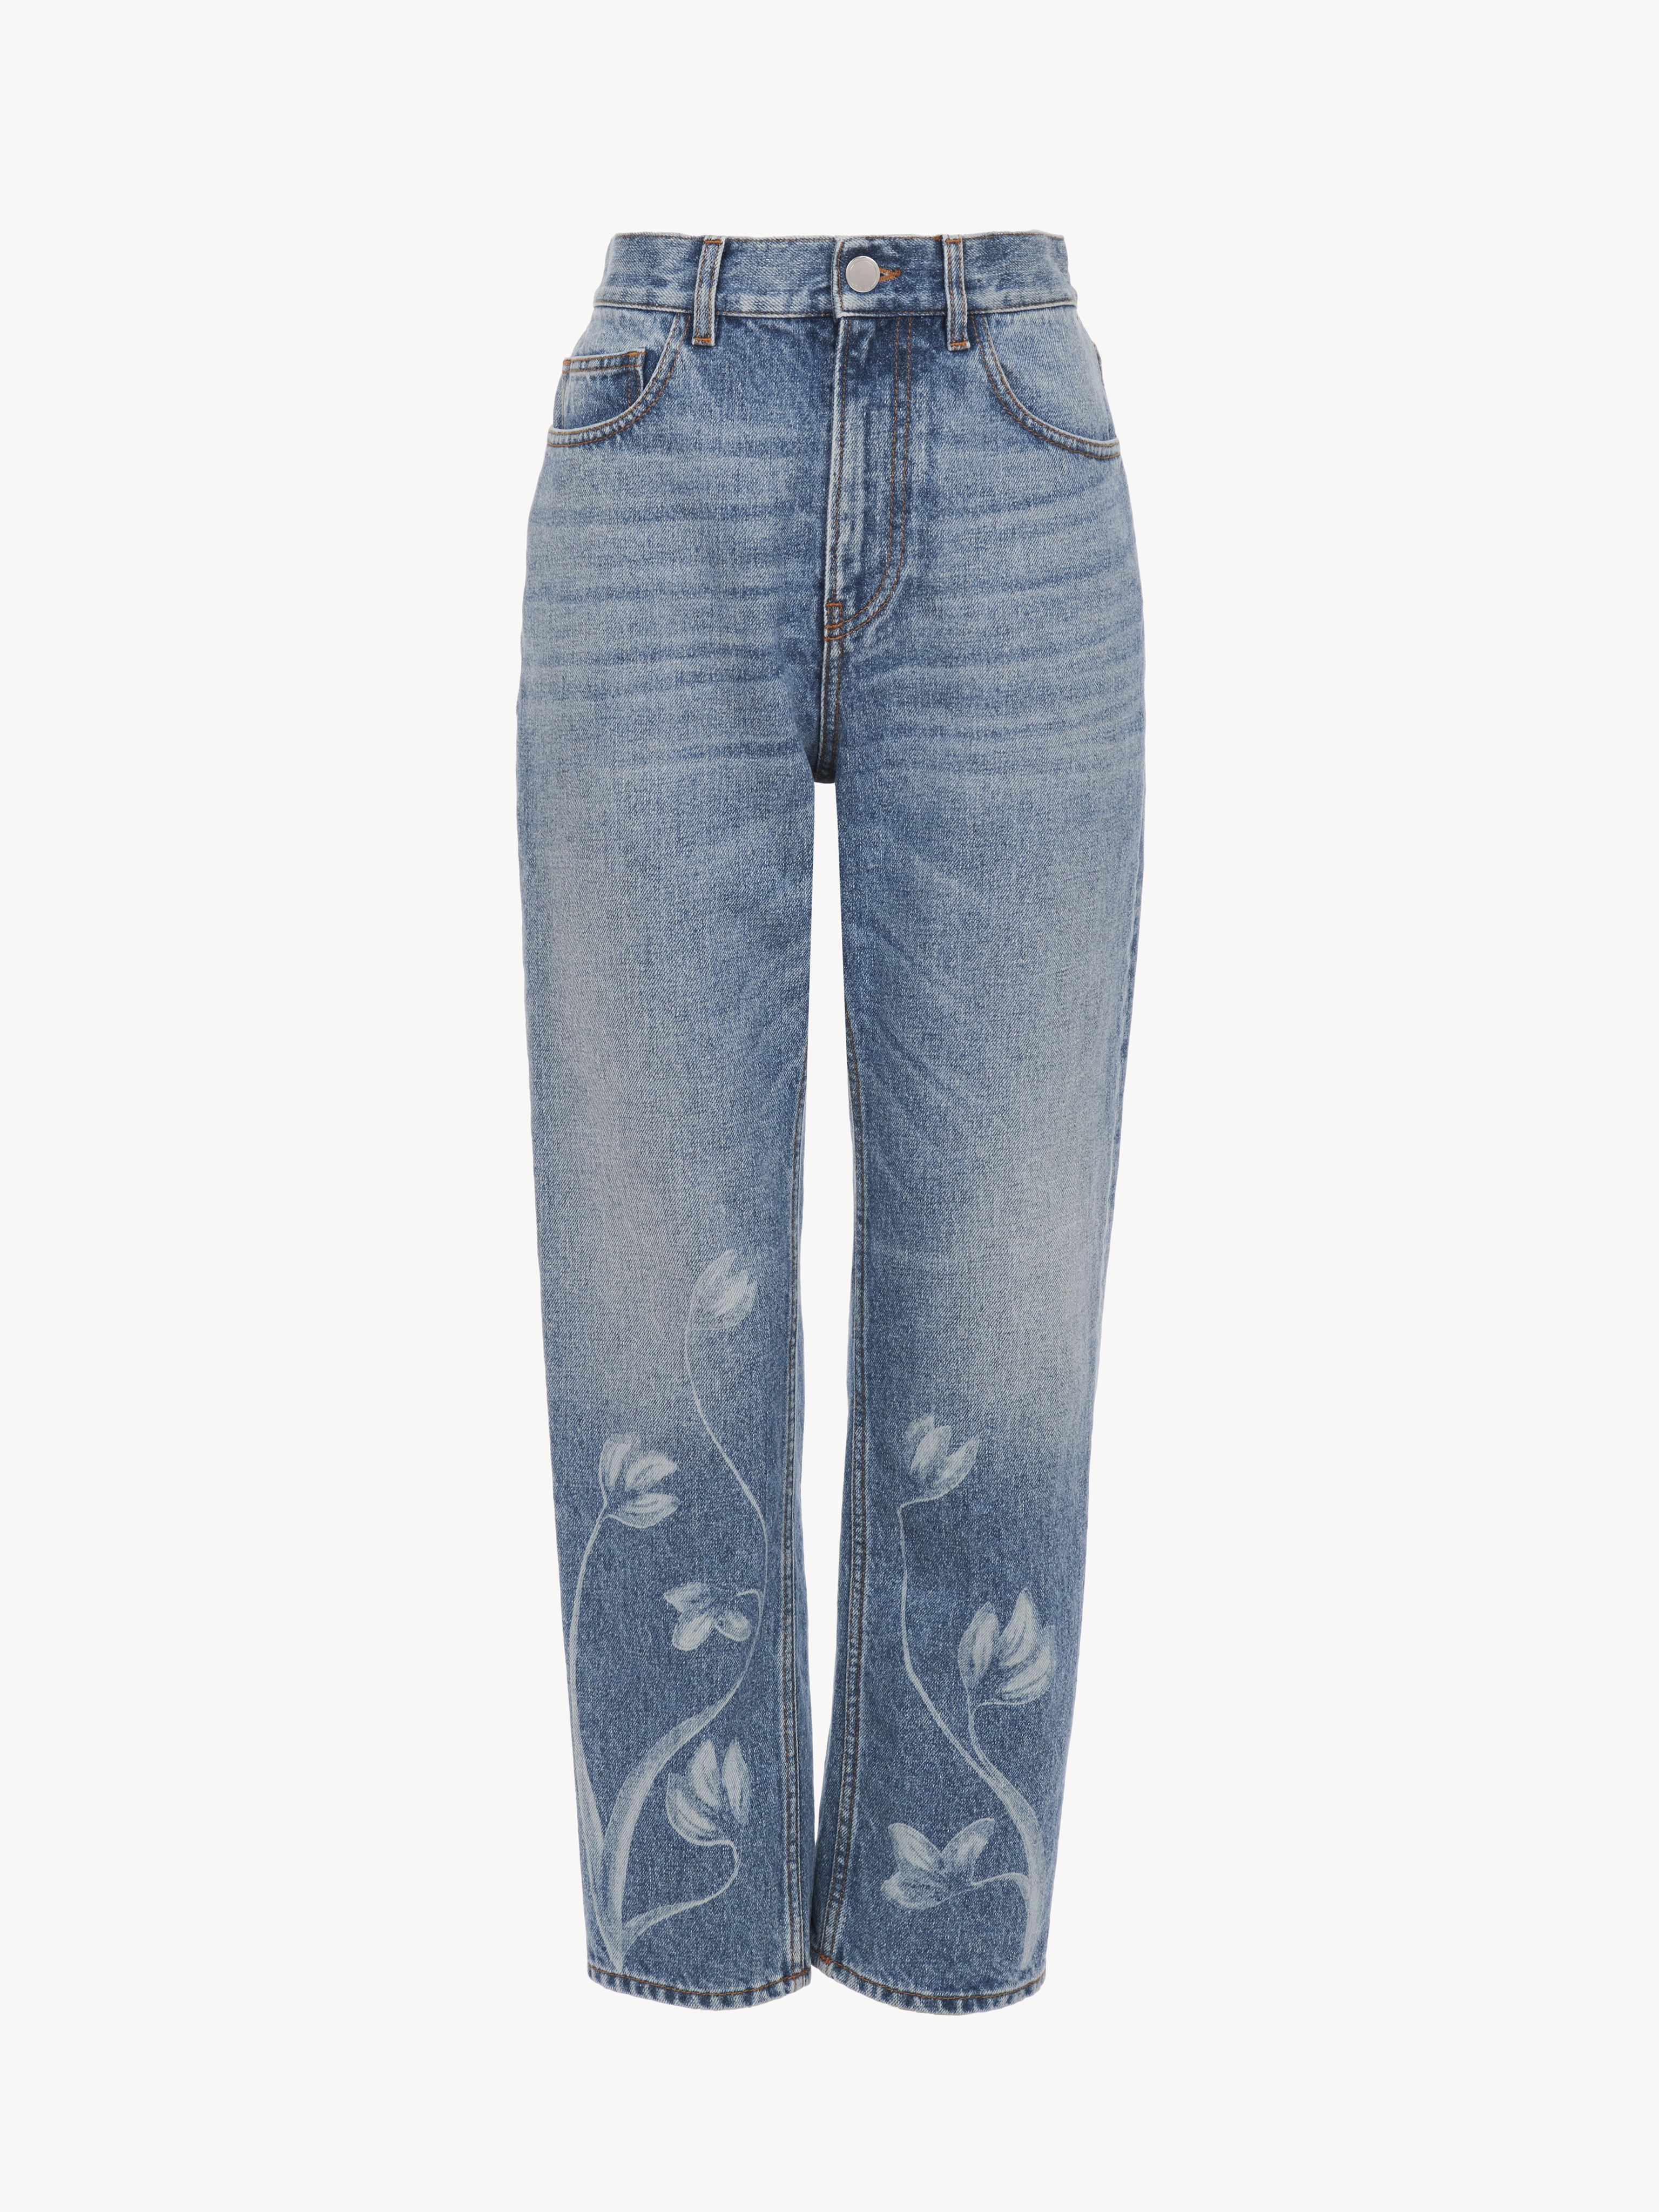 Chloé Straight Cropped Jeans Blue Size 26 87% Cotton, 13% Hemp